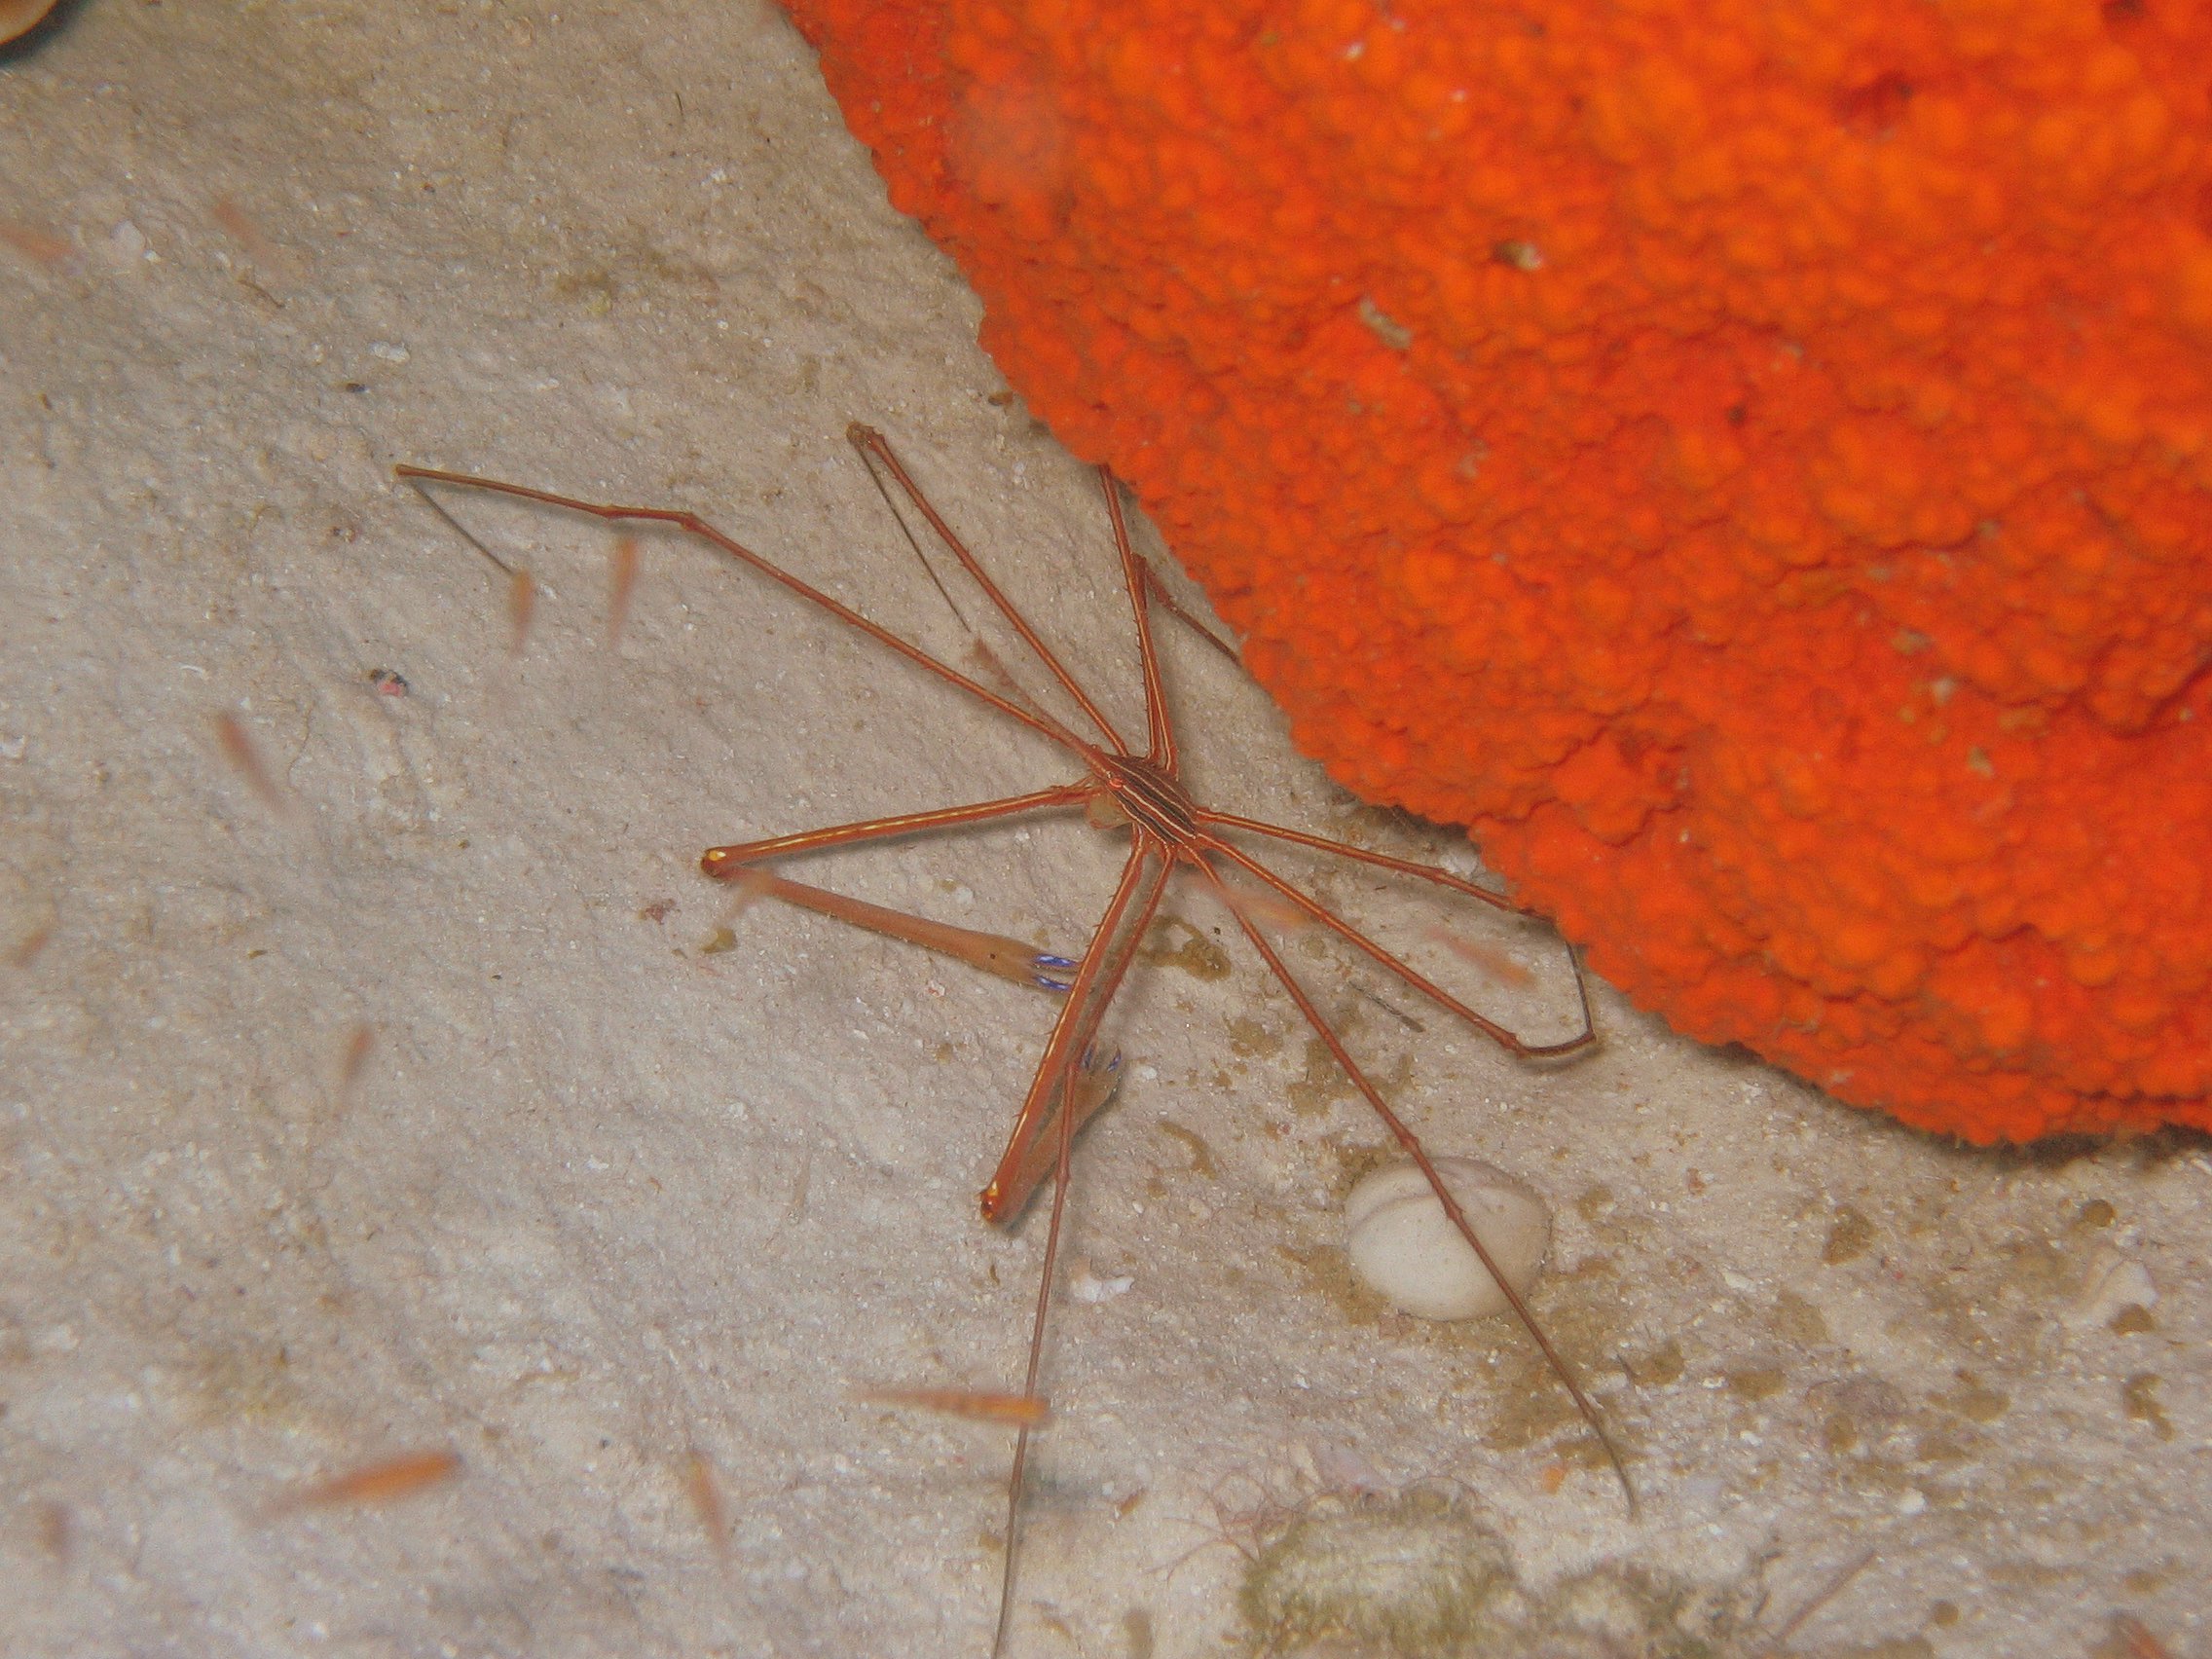 Arrow crab from Bonaire